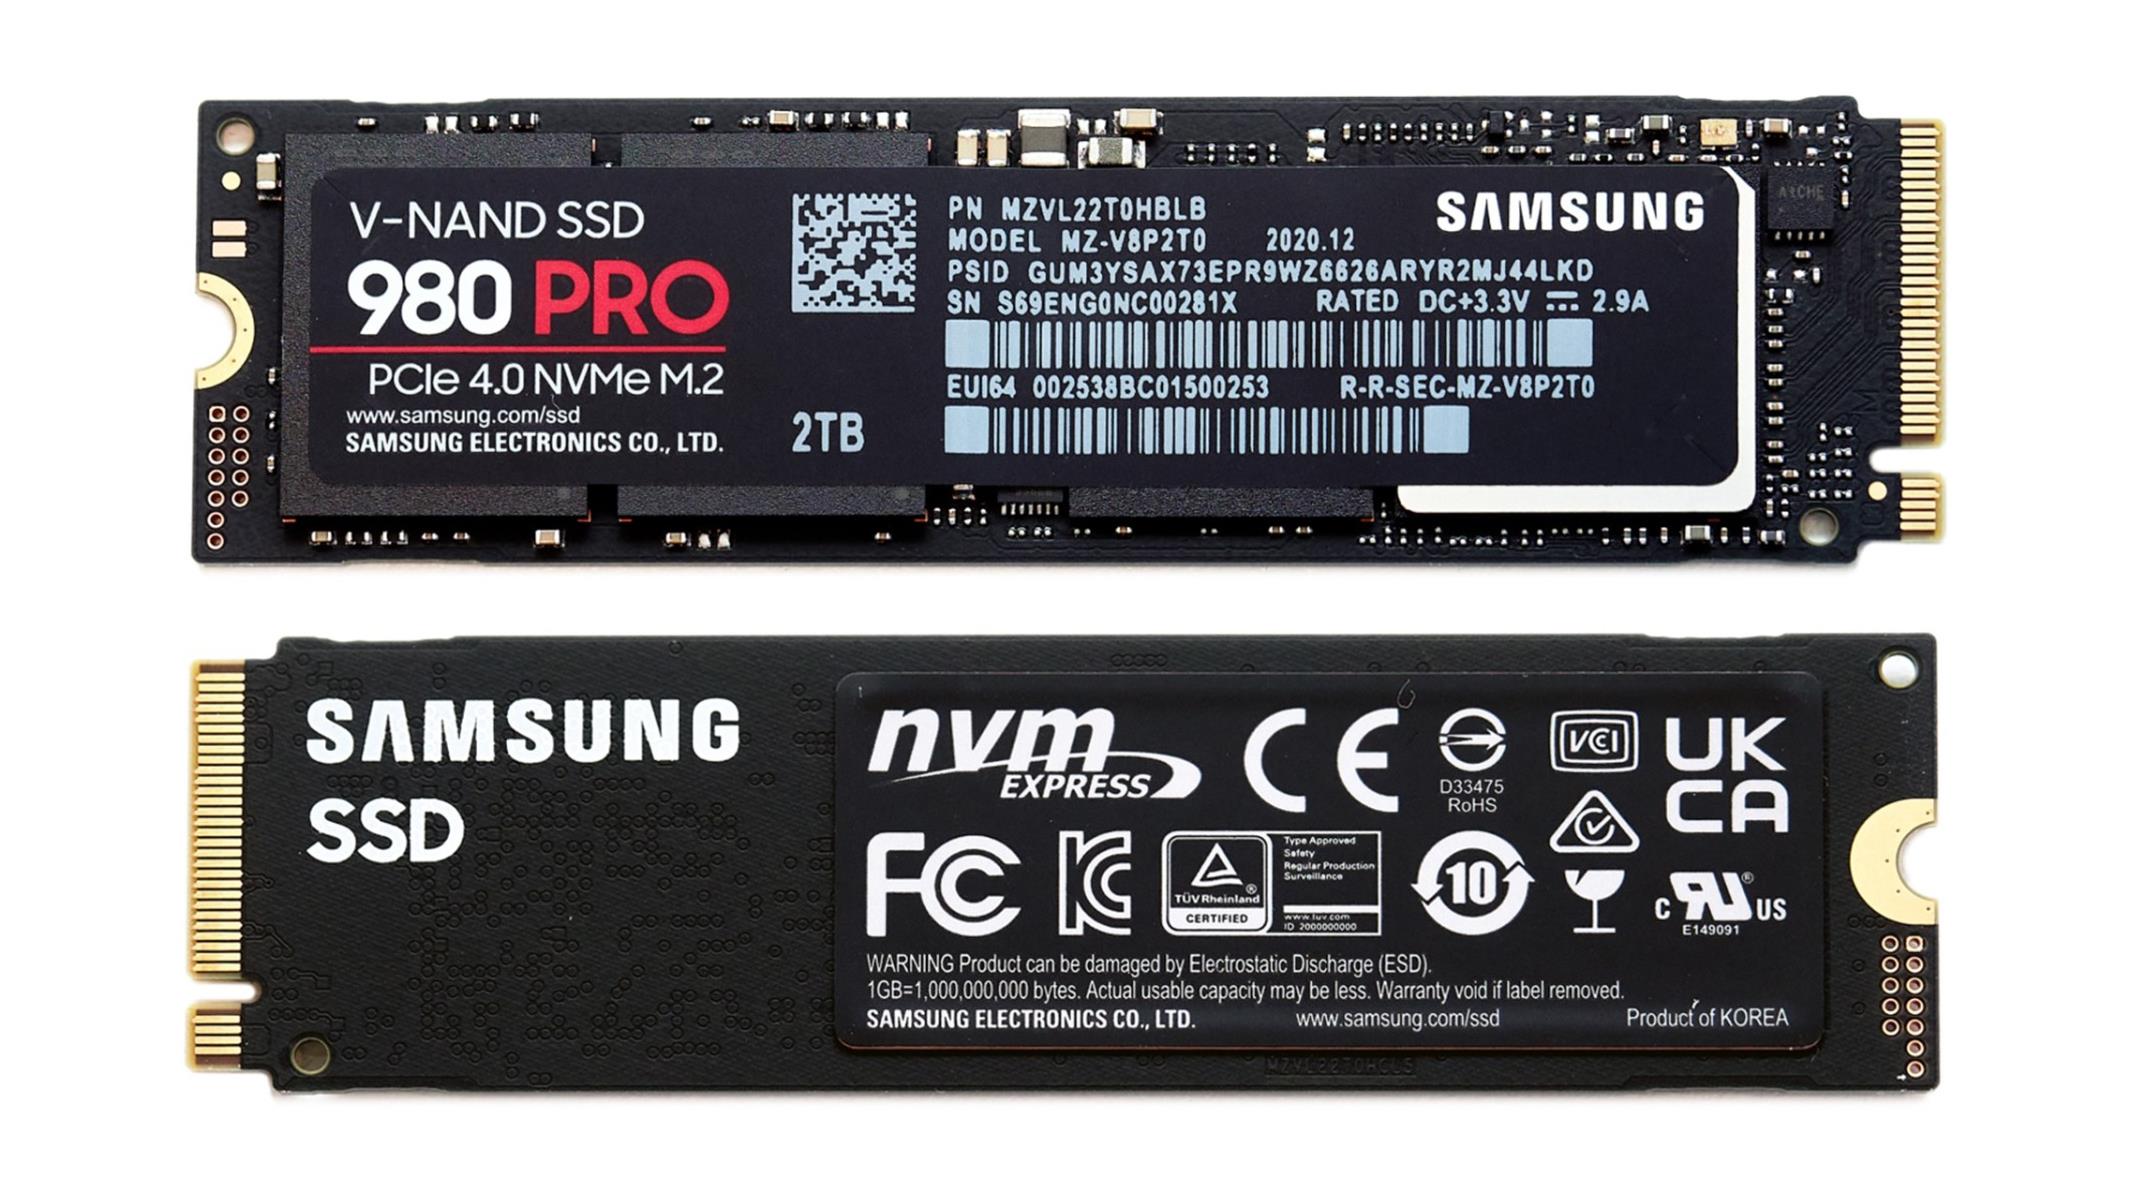 Samsung SSD 980 Pro 2TB Review: Flagship PCIe 4 NVMe Storage 